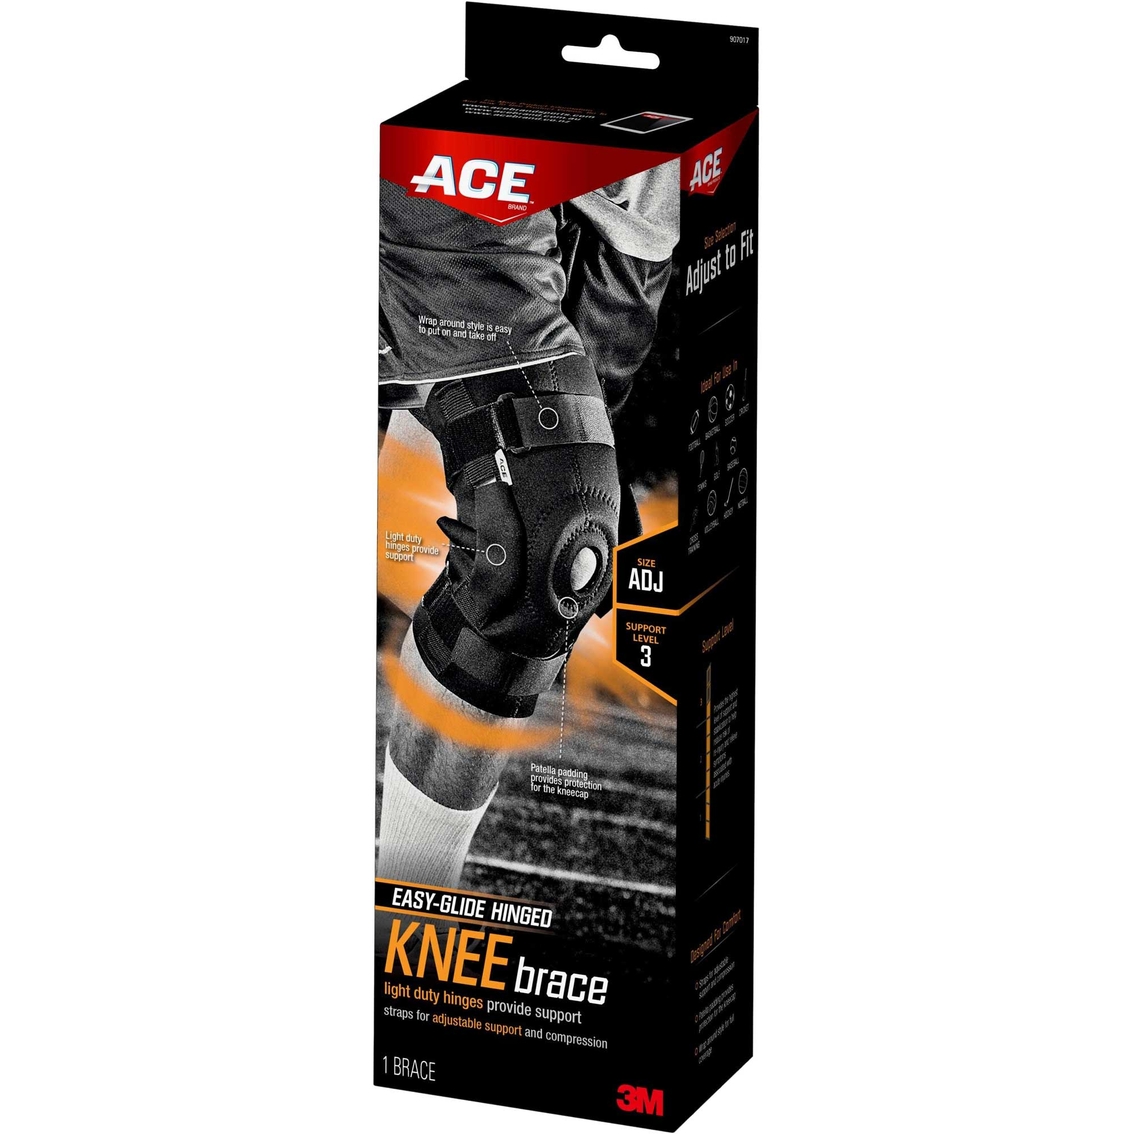 ACE Hinged Knee Brace - Image 10 of 10